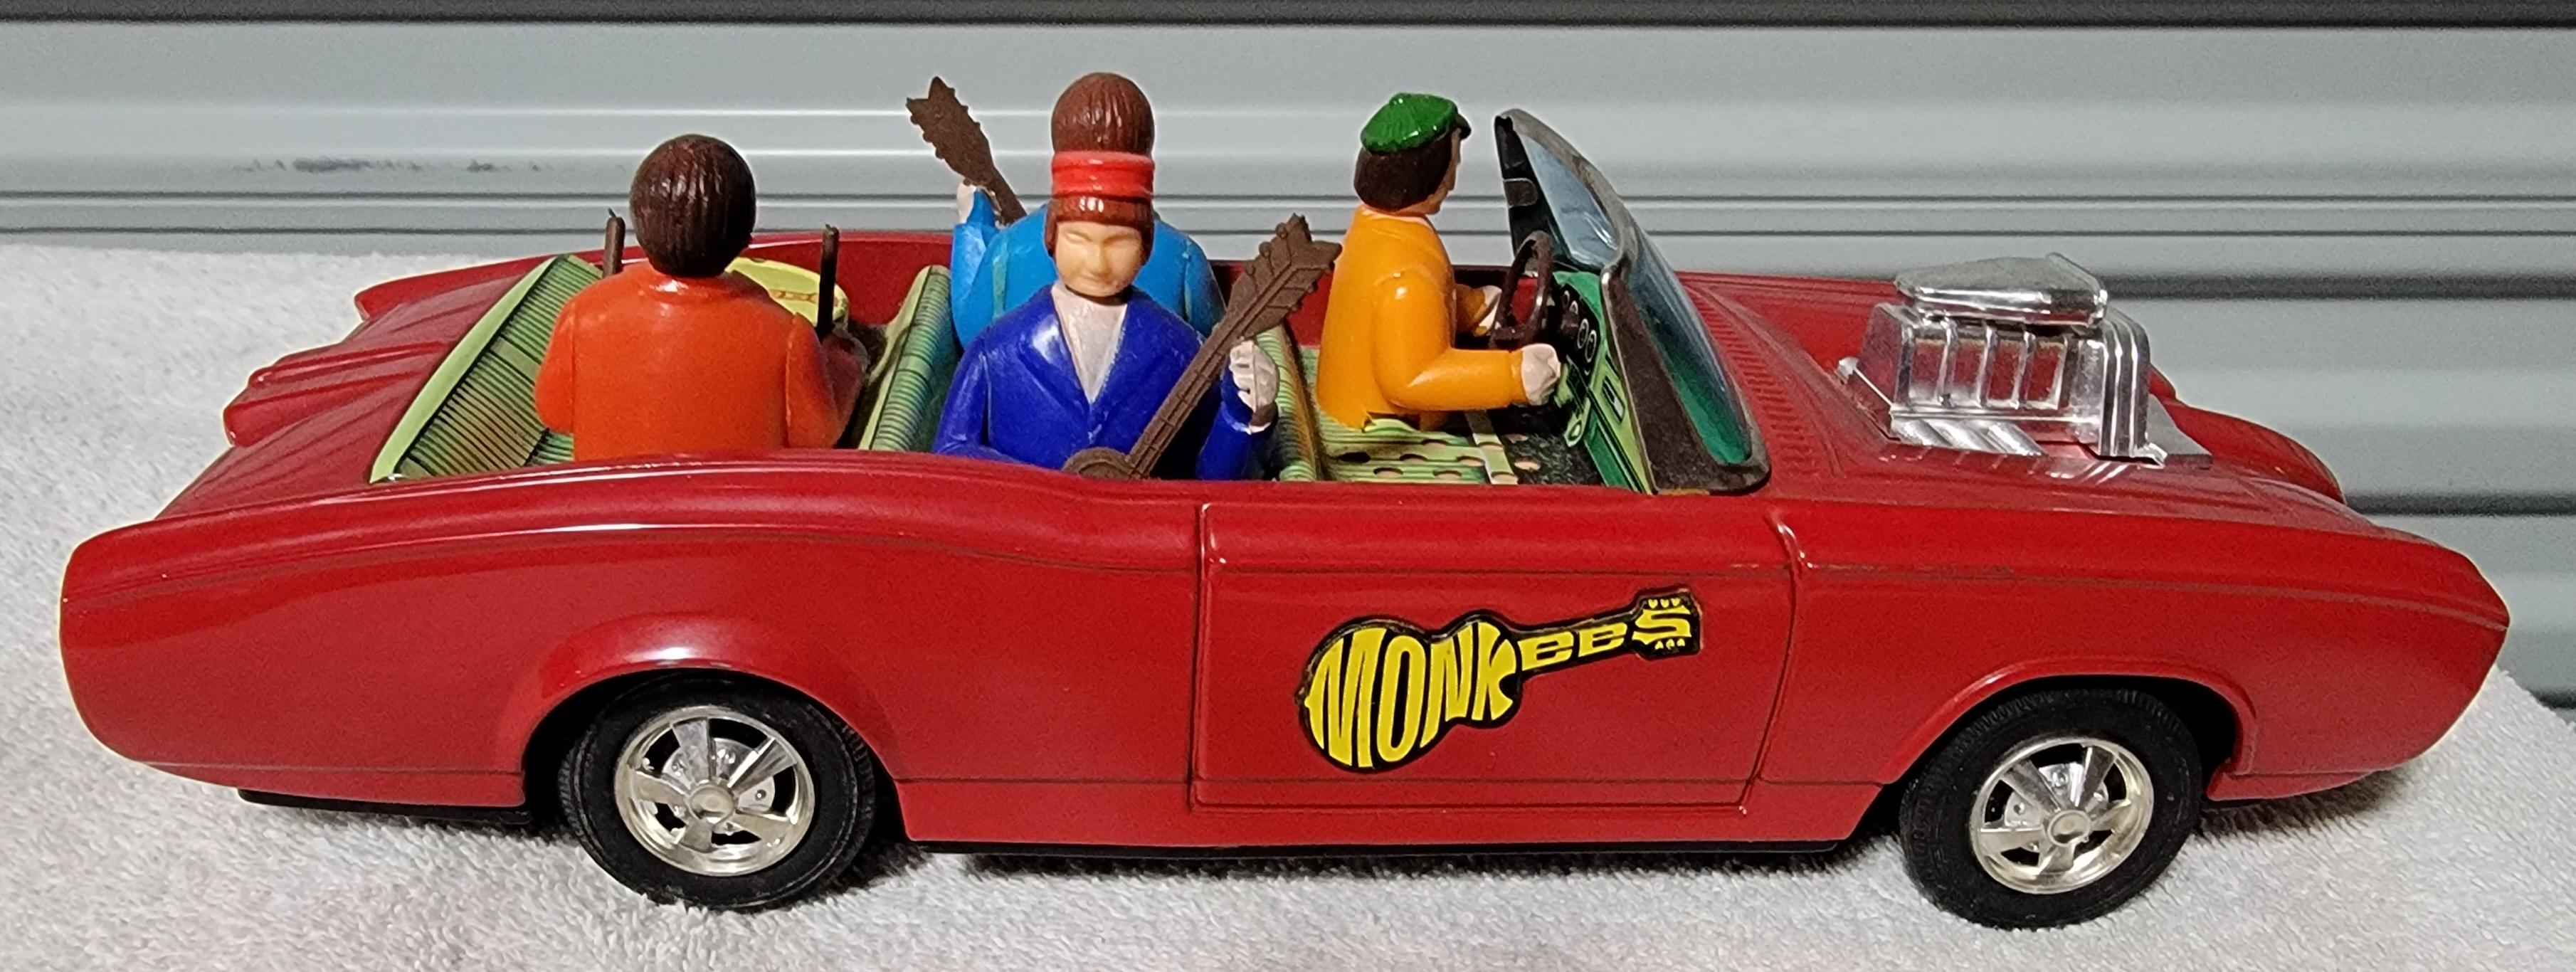 Monkeys Monkee-Mobile Toy Car 6